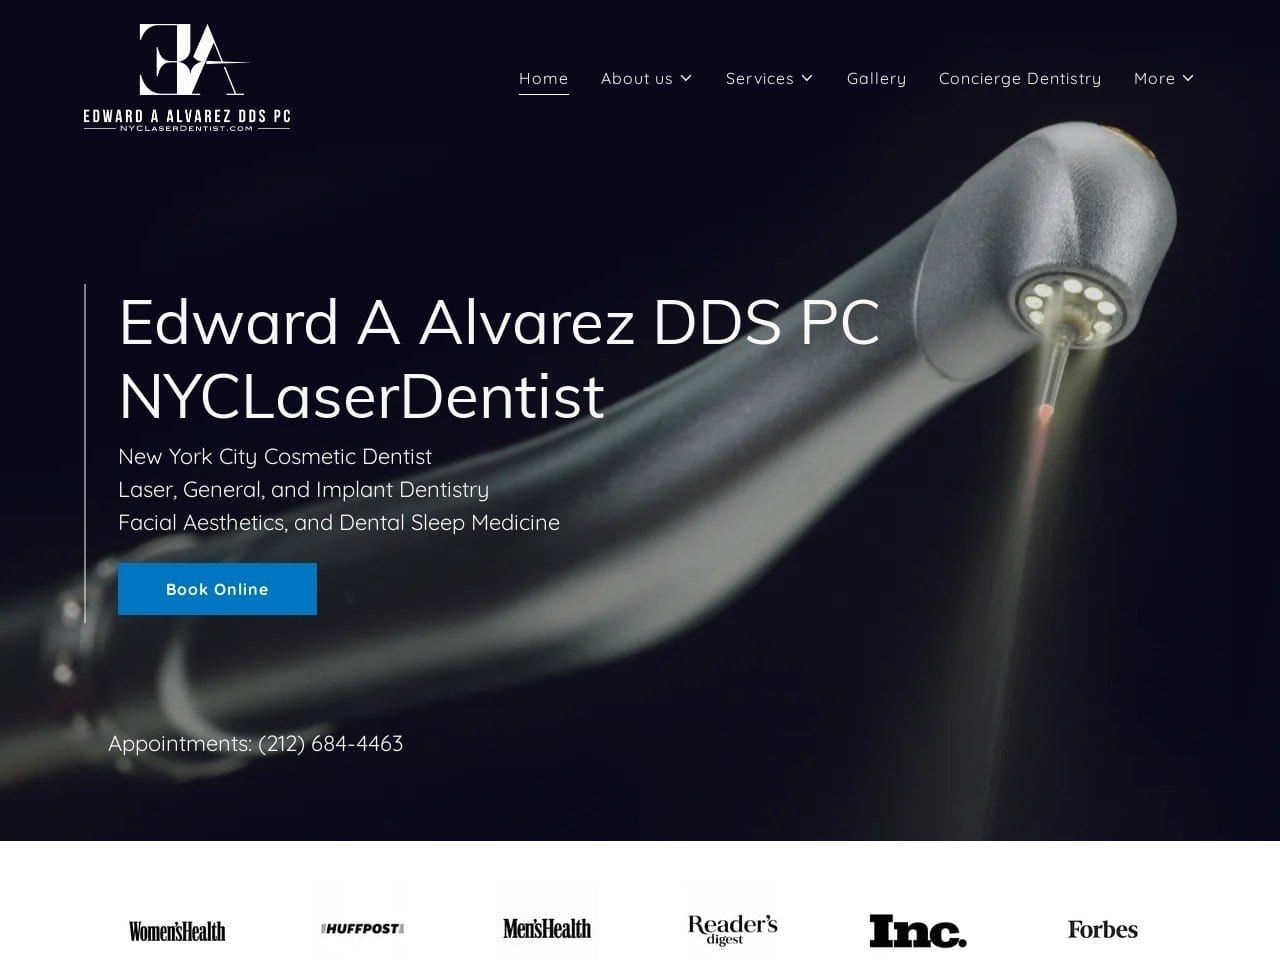 Edward A Alvarez DDS PC Website Screenshot from nyclaserdentist.com